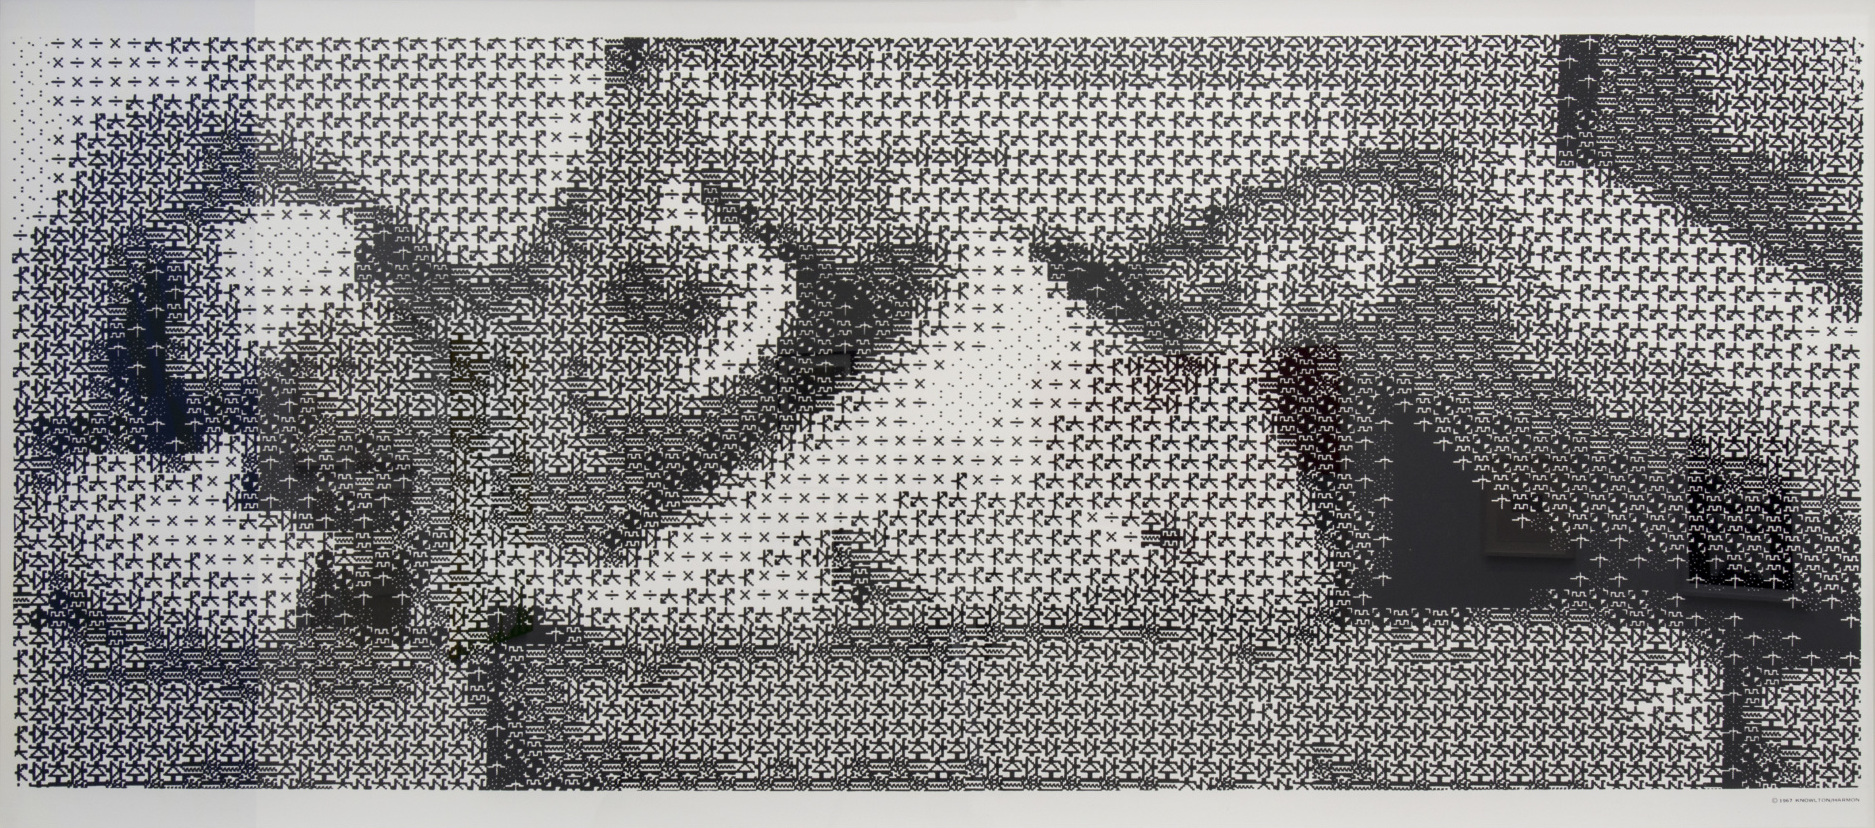 Computer Nude (Studies in Perception I), Leon Harmon und Ken Knowlton, 1967